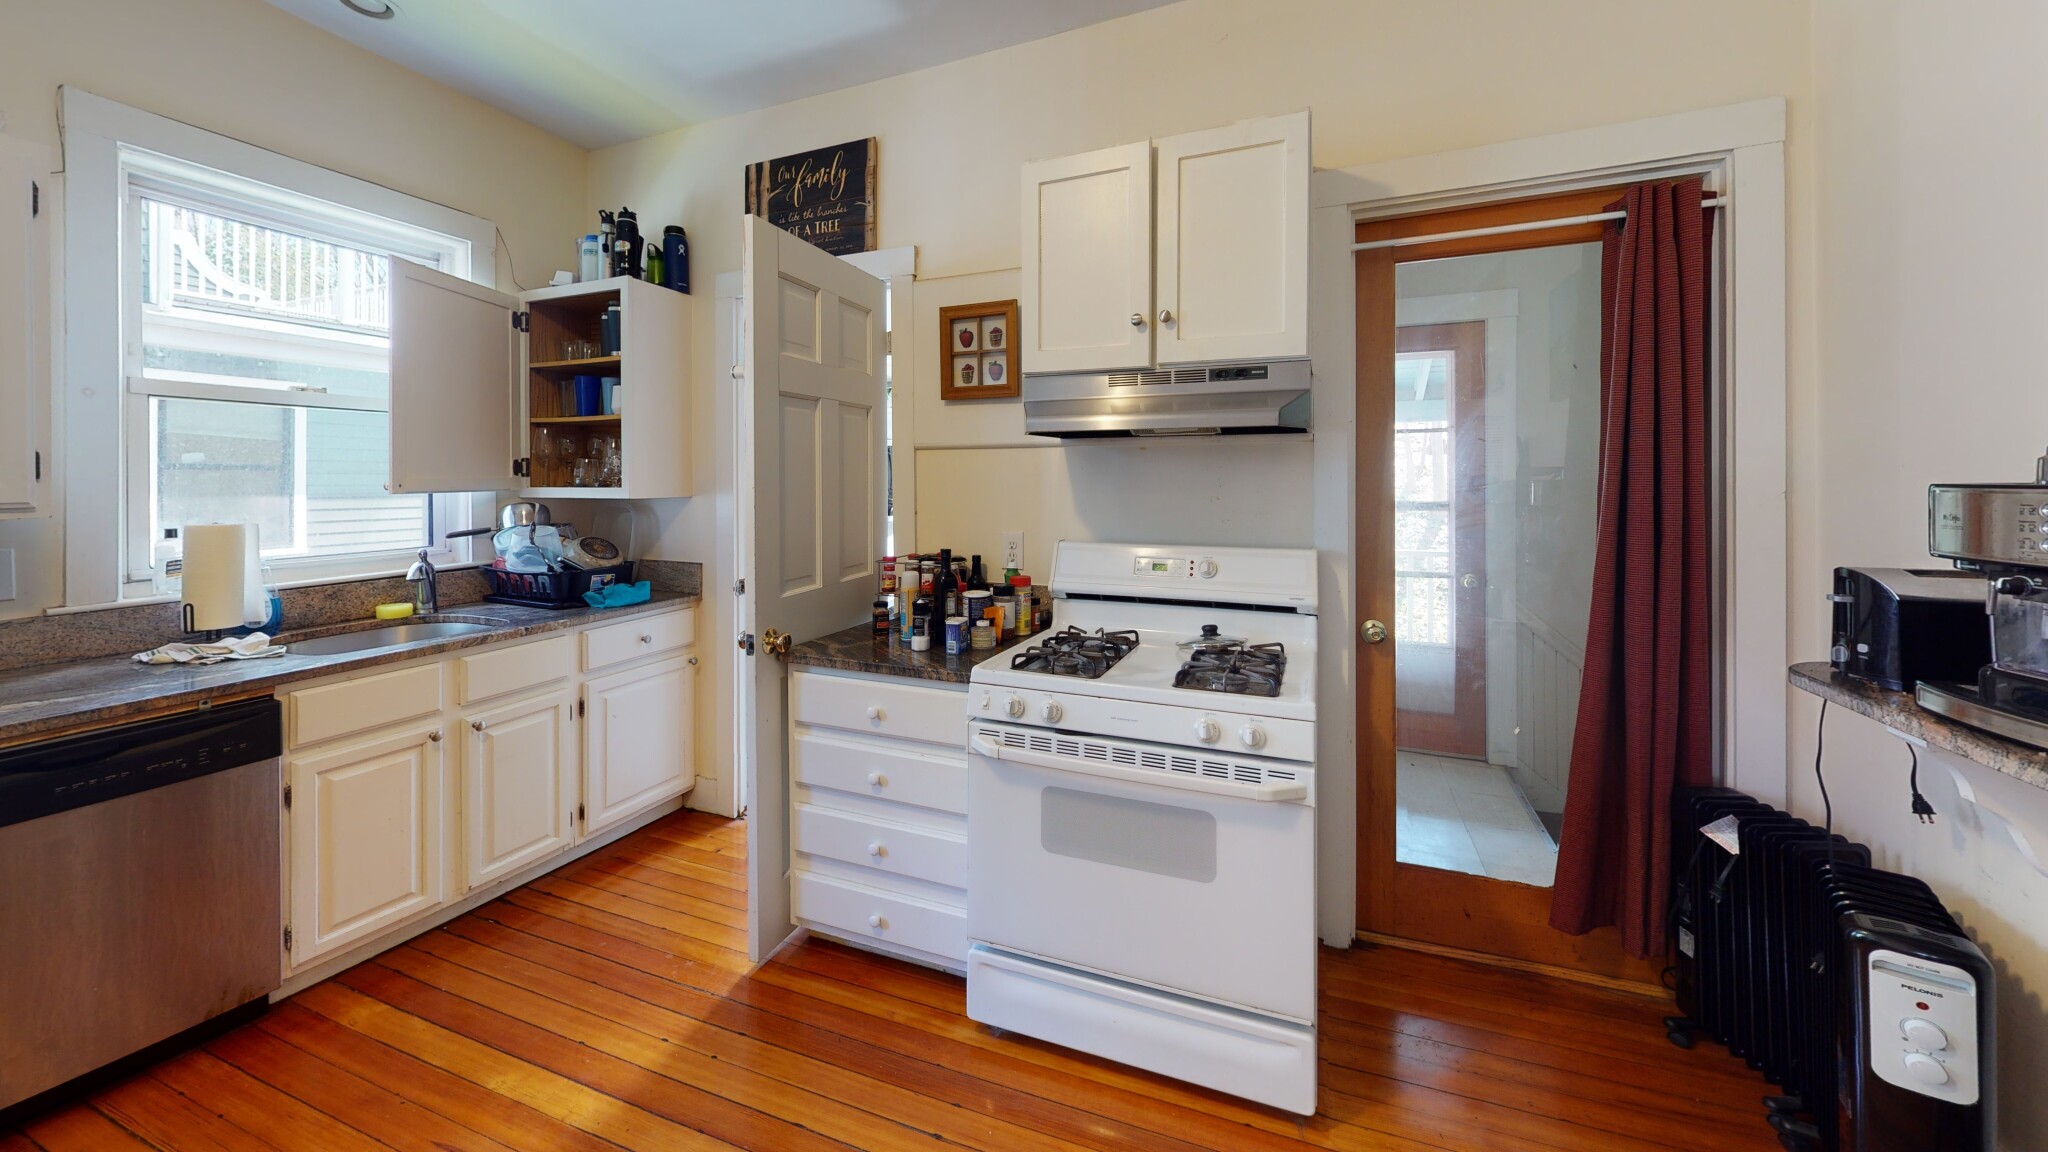 Photos of apartment on Orchard,Boston MA 02445